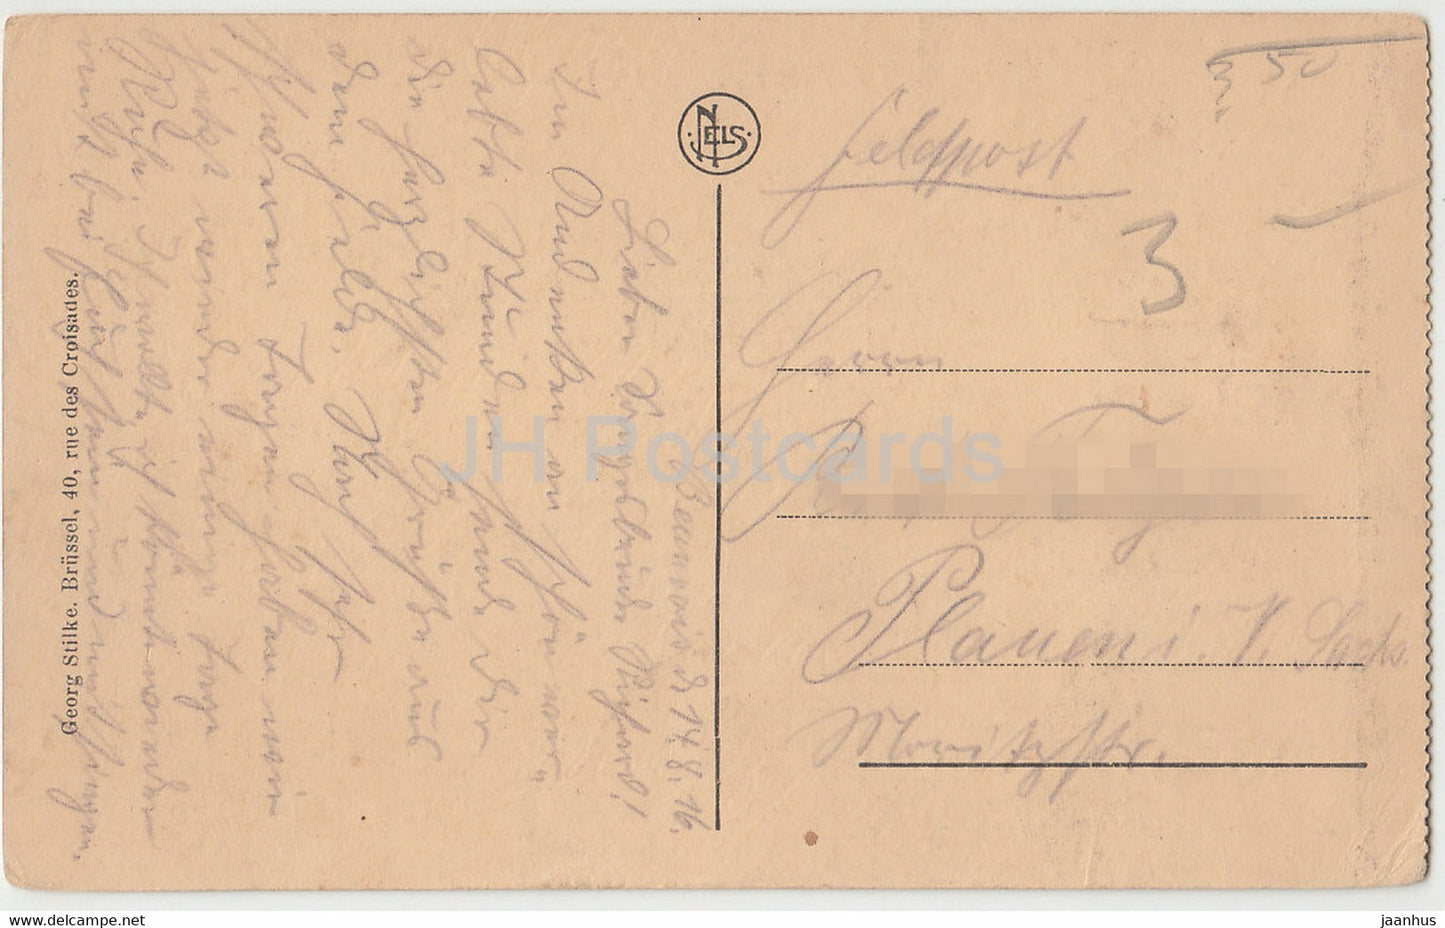 Saint Quentin - Justizpalast - Feldpost - carte postale ancienne - 1916 - France - occasion